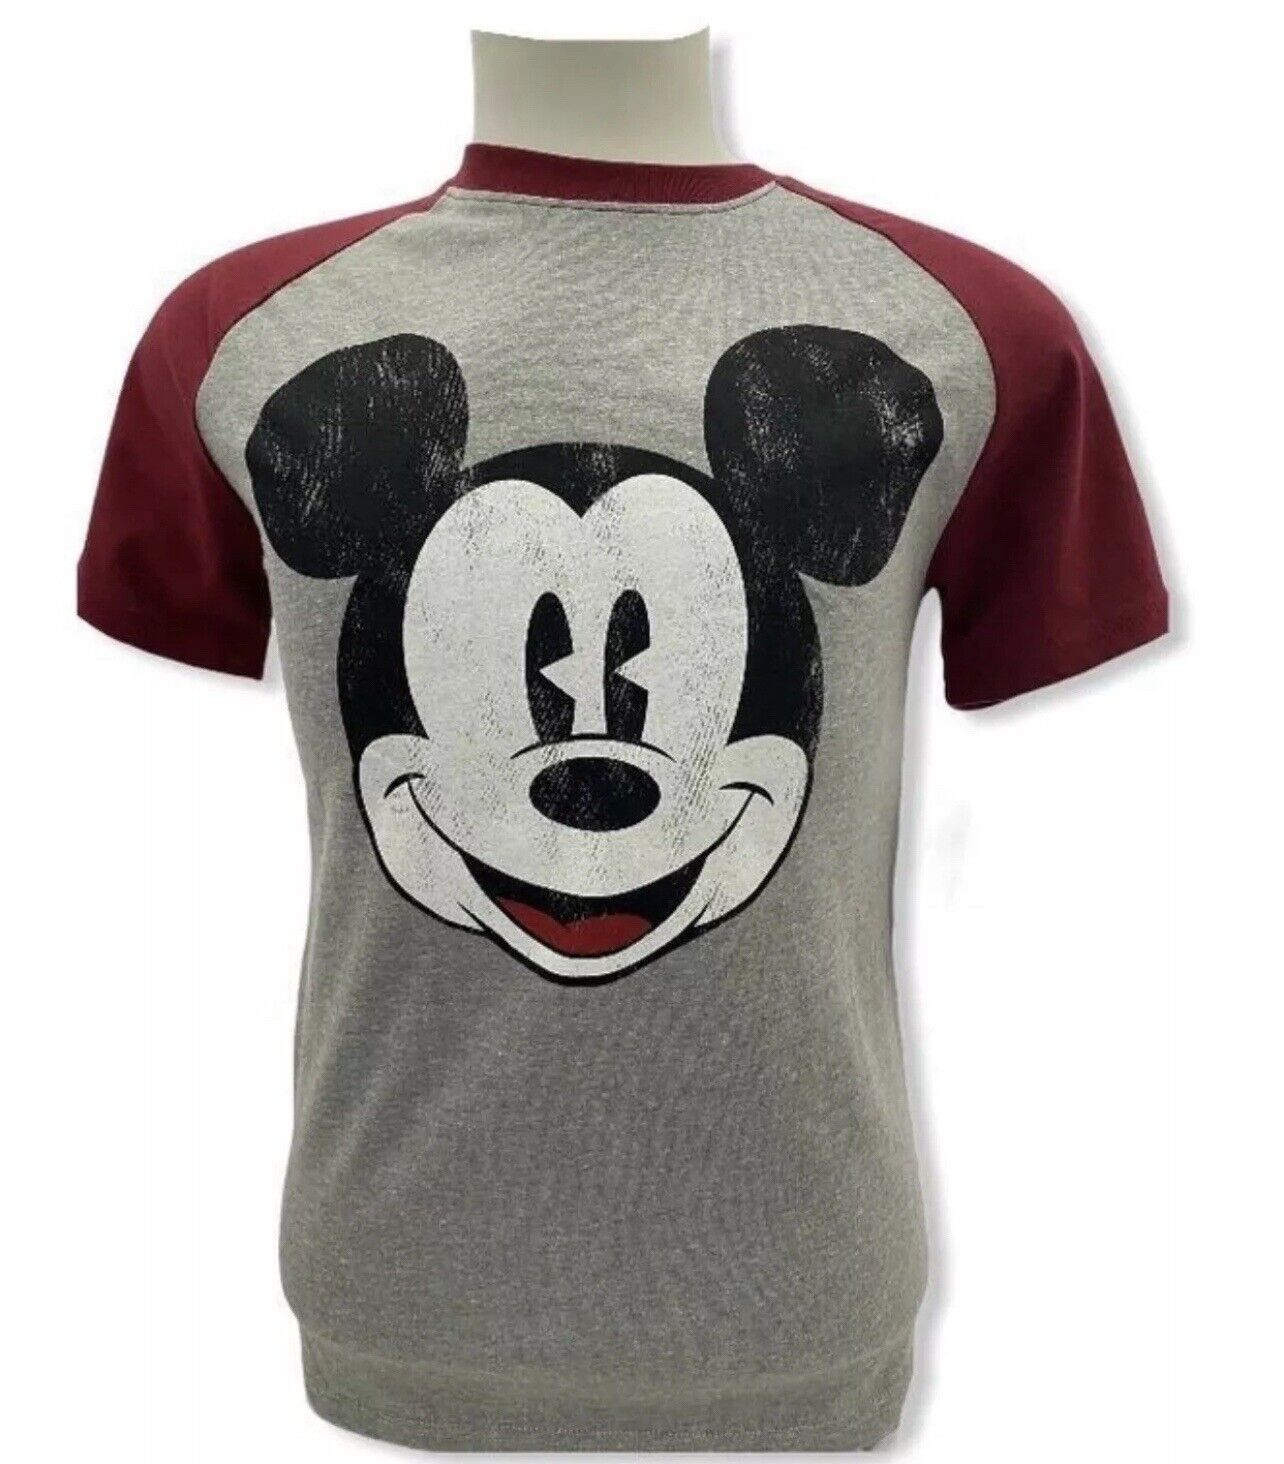 Disney Mickey Mouse Shirt Exclusive Design Pajamas Shirt Size M